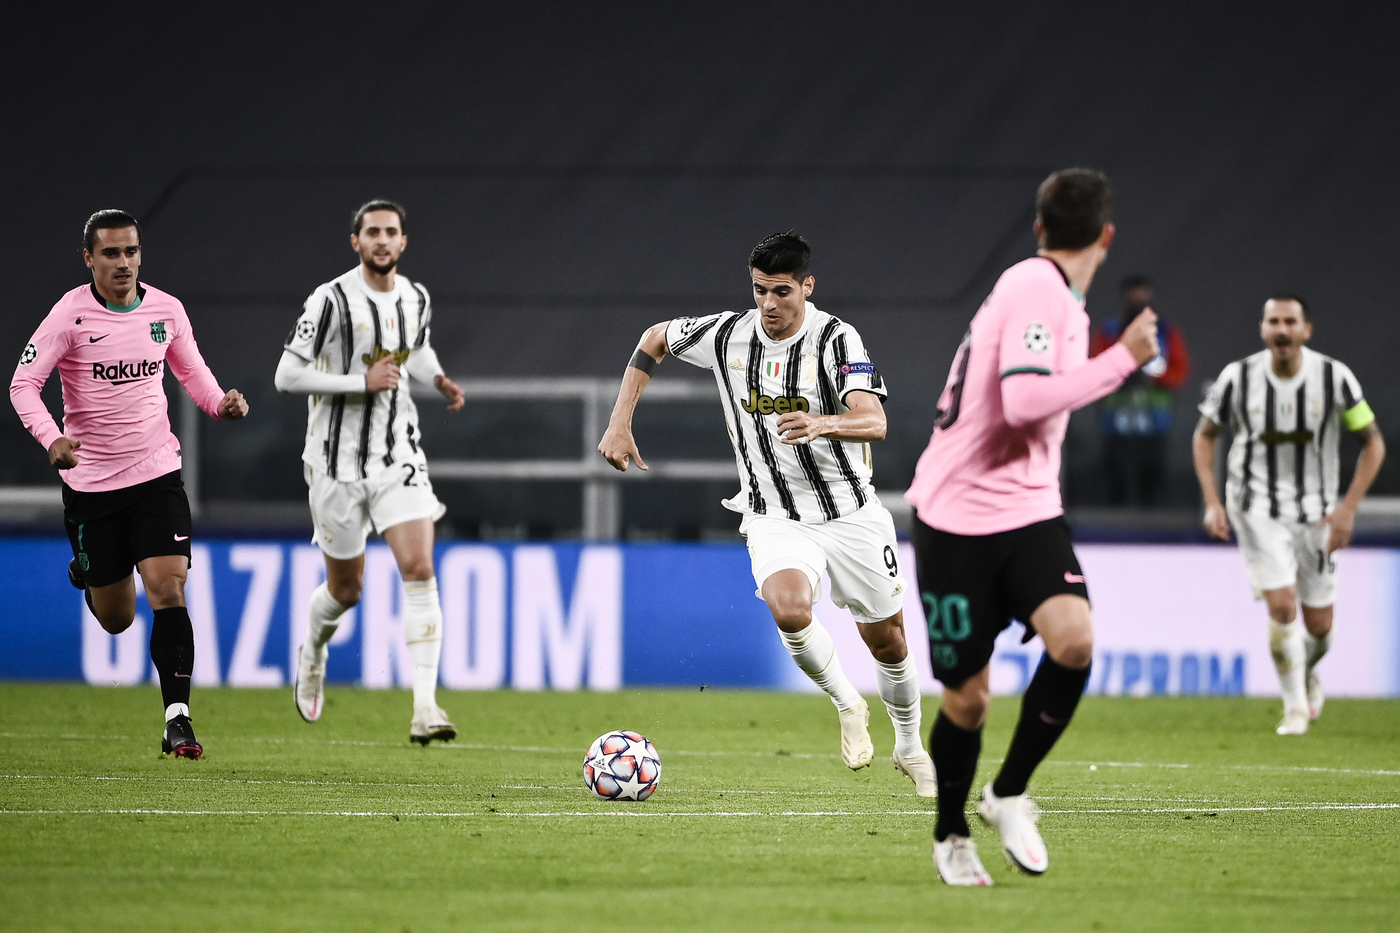 VIDEO Juventus-Barcellona 0-2, Highlights, gol e sintesi: Dembelé e Messi  schiantano i bianconeri, annullate tre reti a Morata – OA Sport